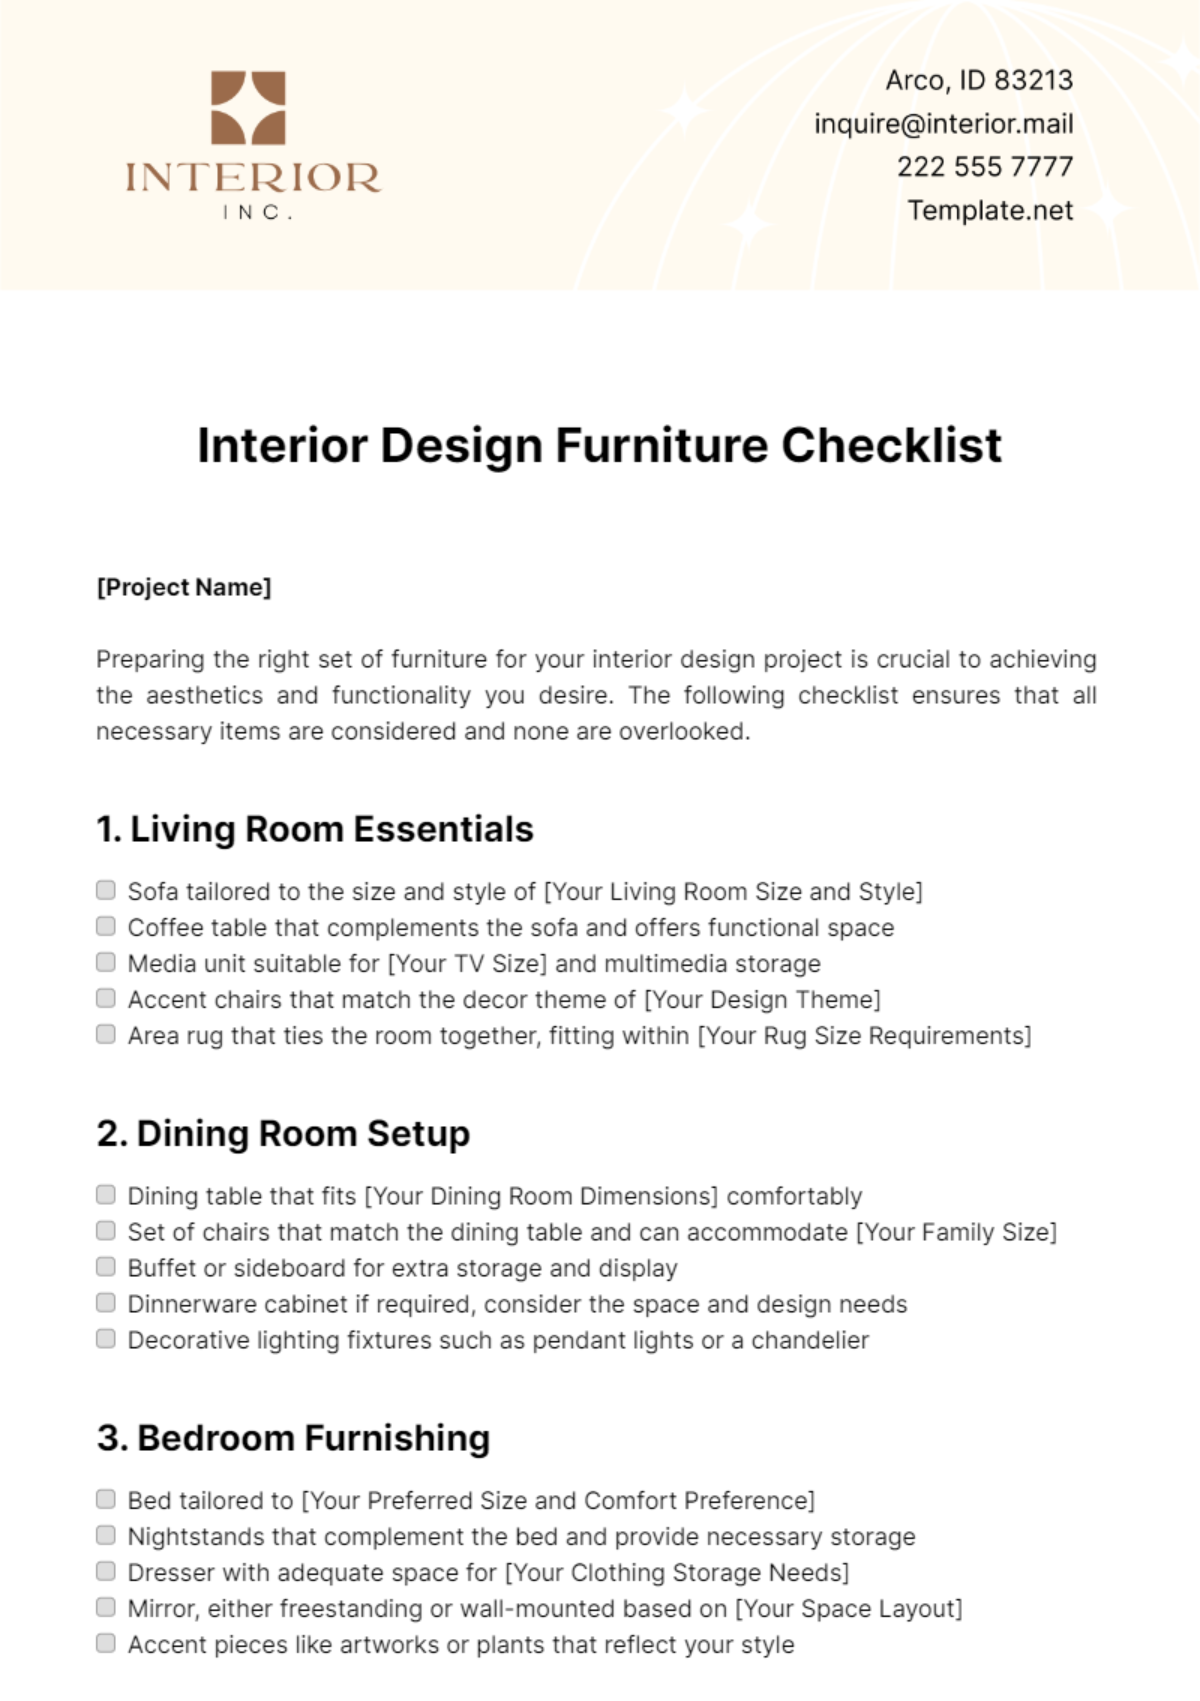 Free Interior Design Furniture Checklist Template